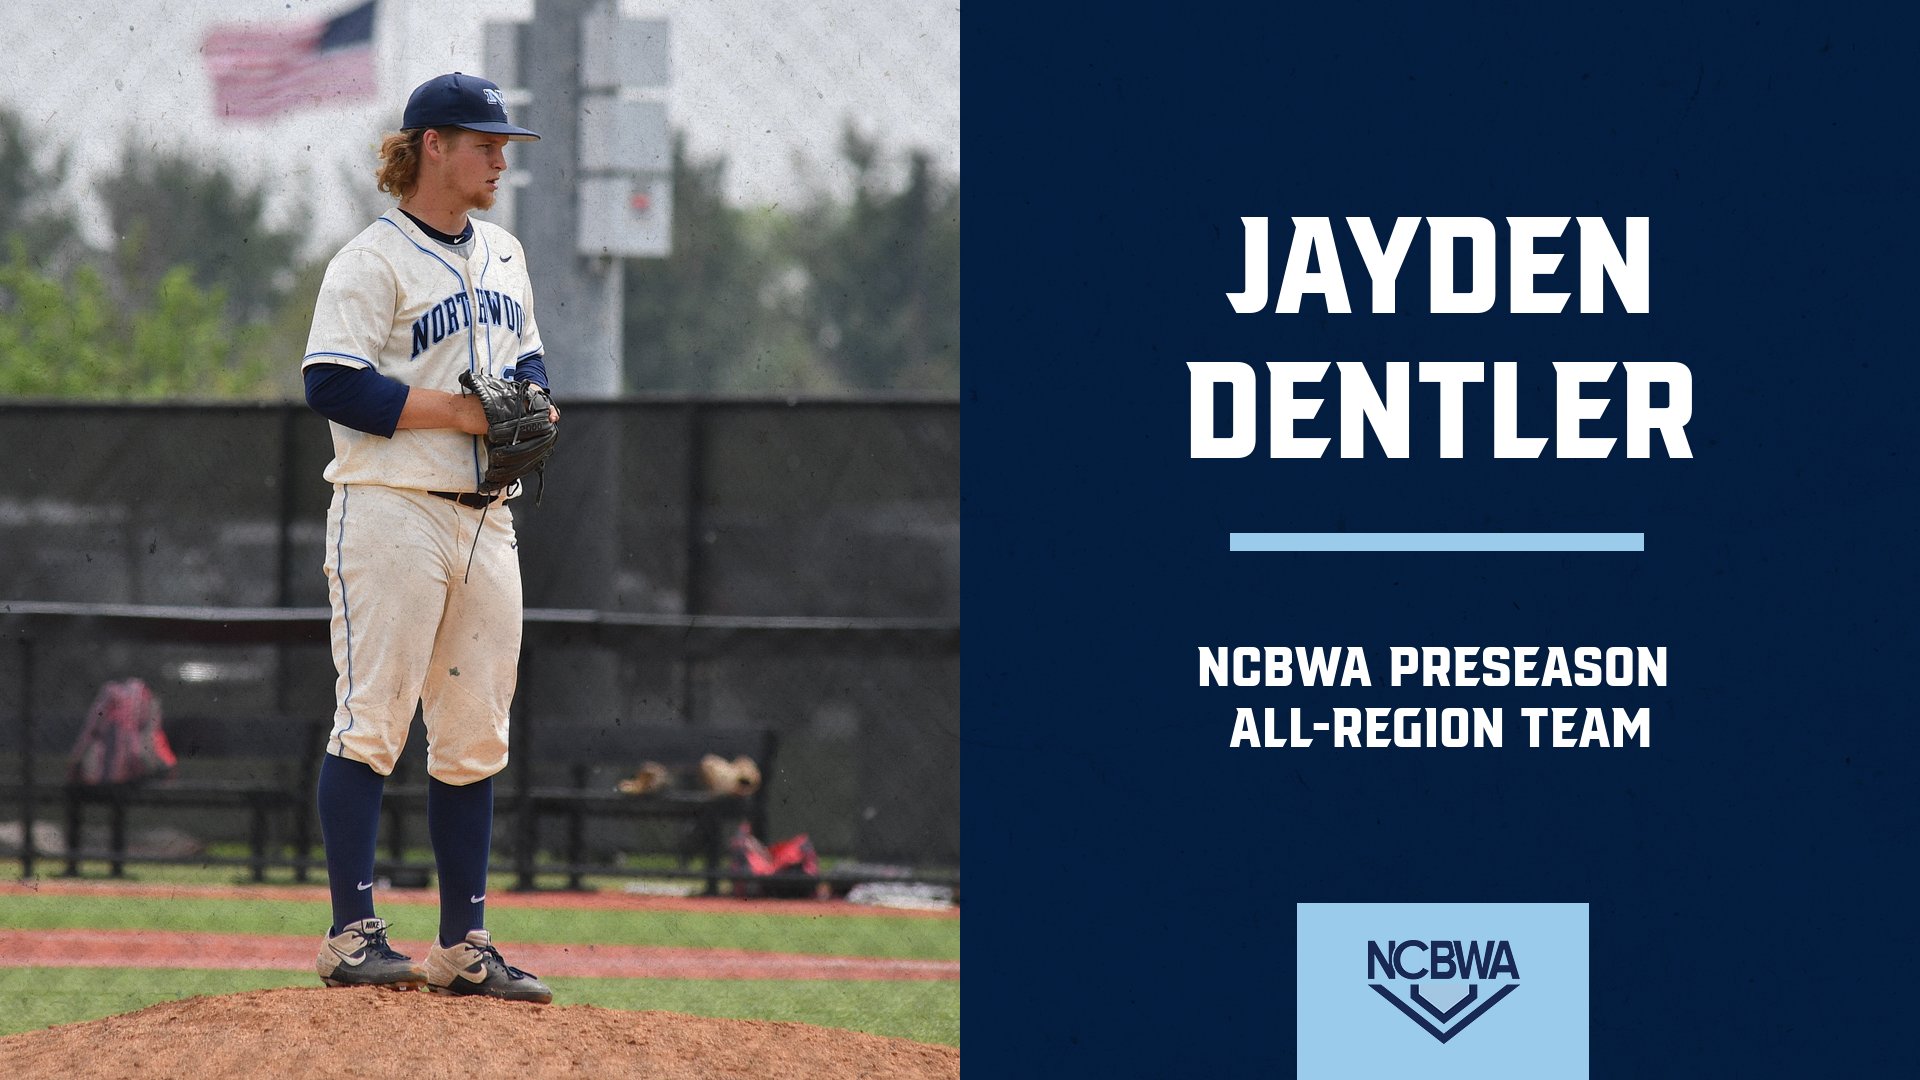 Baseball Ranked Sixth In NCBWA Preseason Poll - Jayden Dentler Named To Preseason All-Region Team